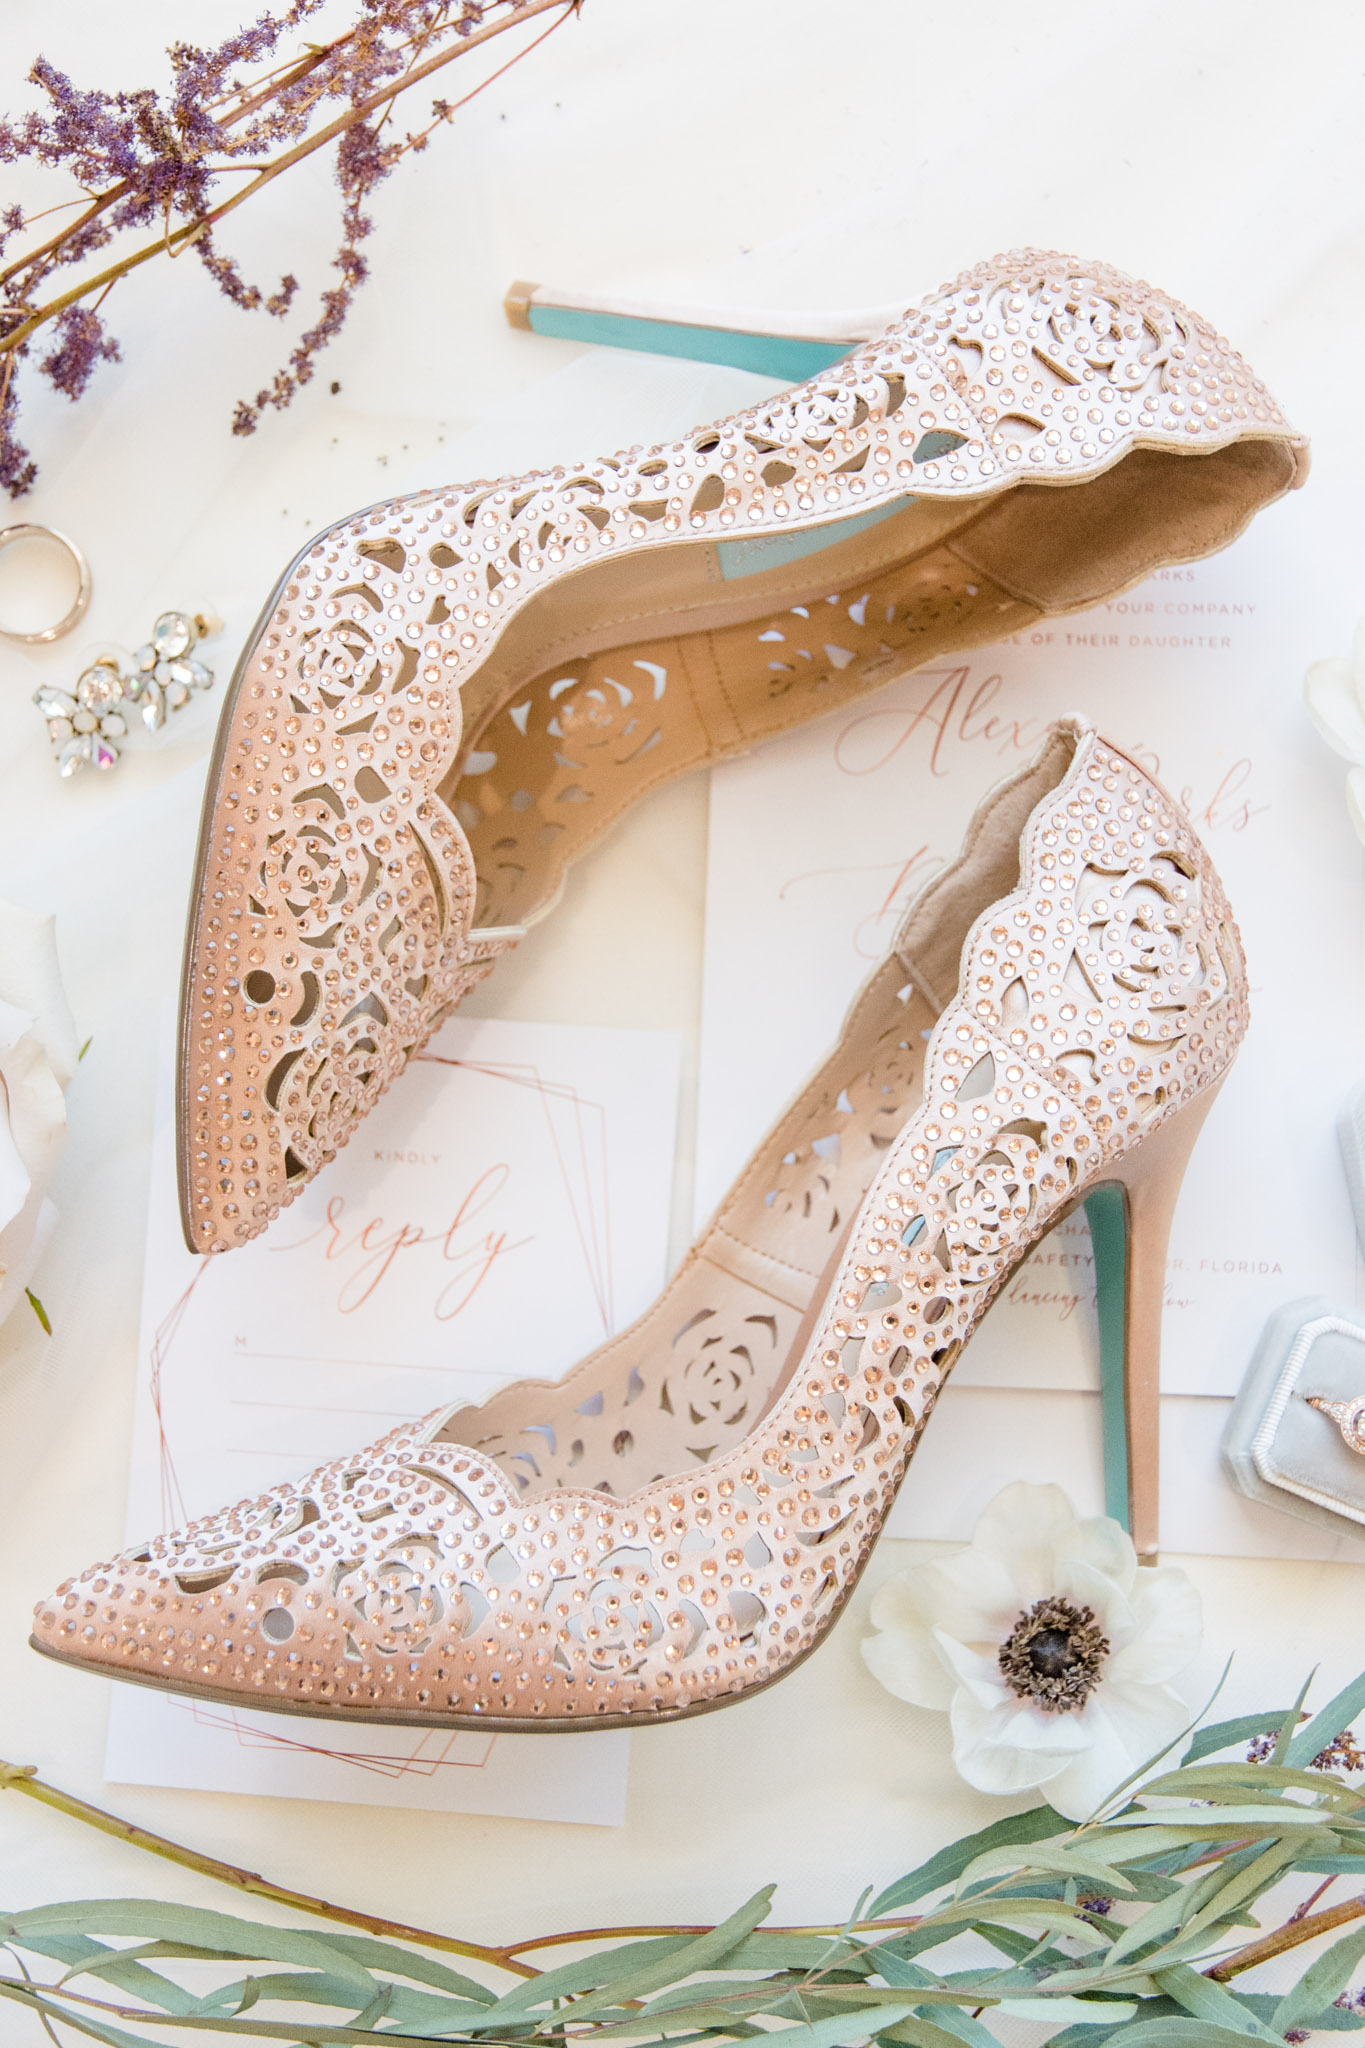 Brid'es wedding shoes sits with wedding invitations.